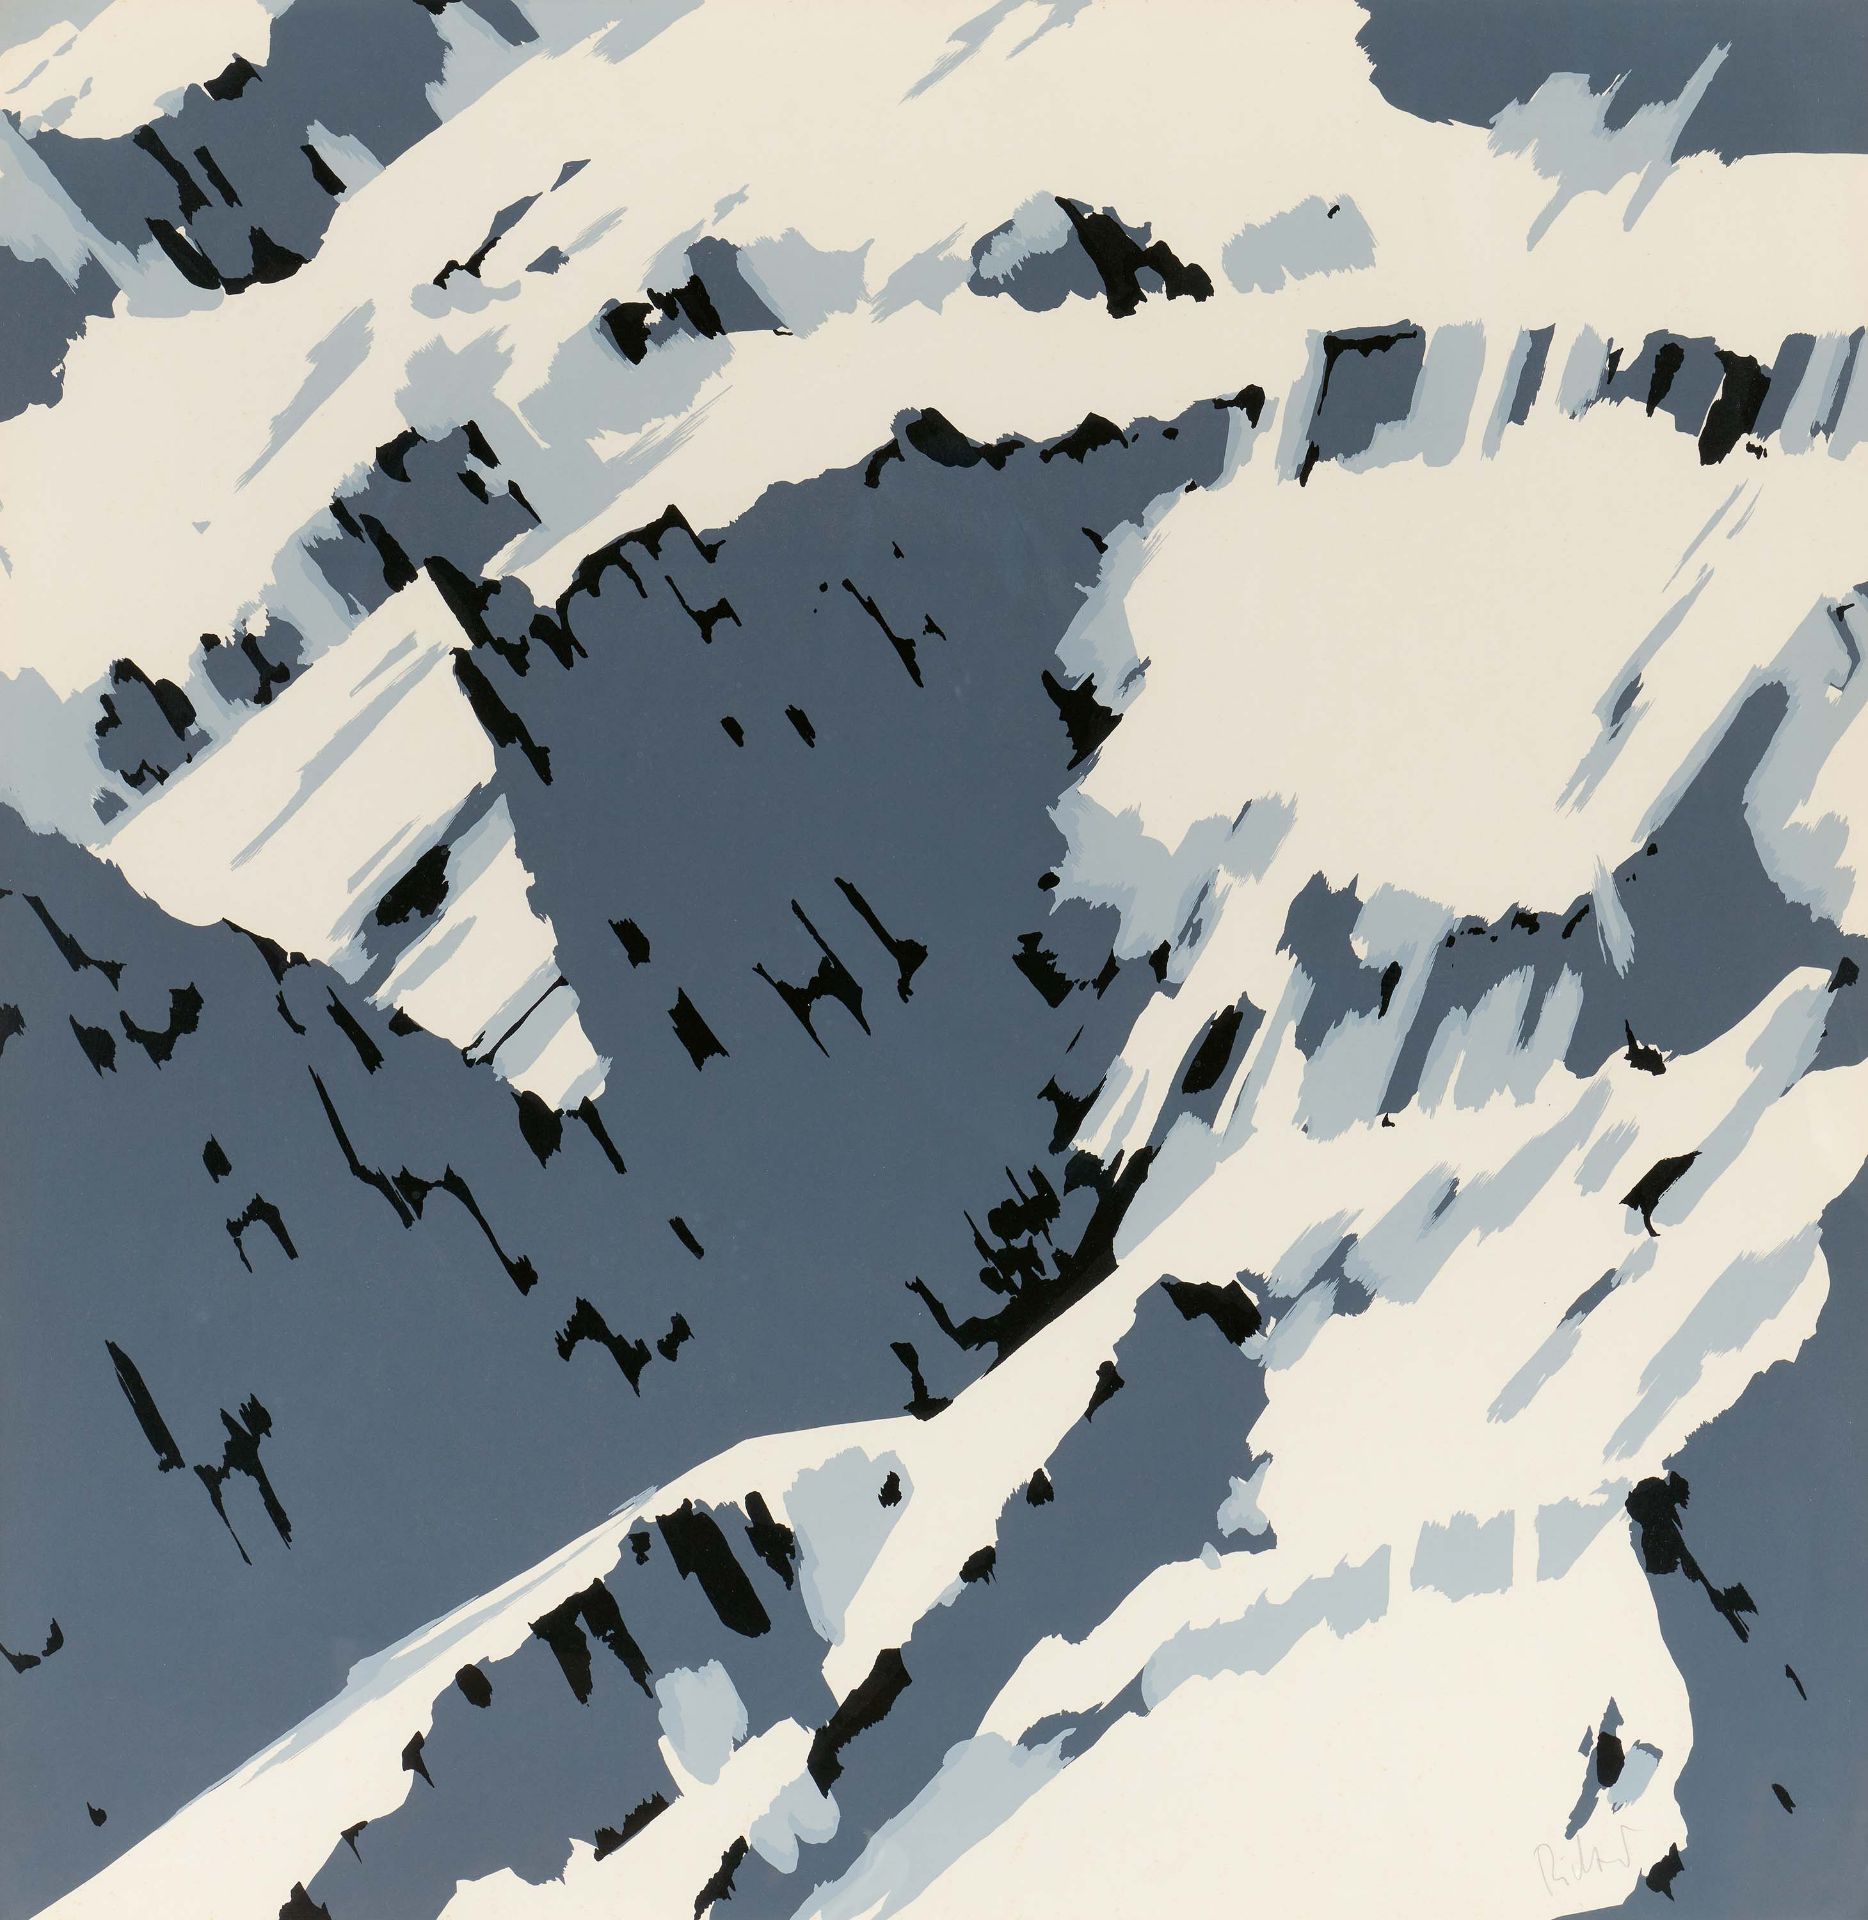 Gerhard Richter: Schweizer Alpen I (B2)